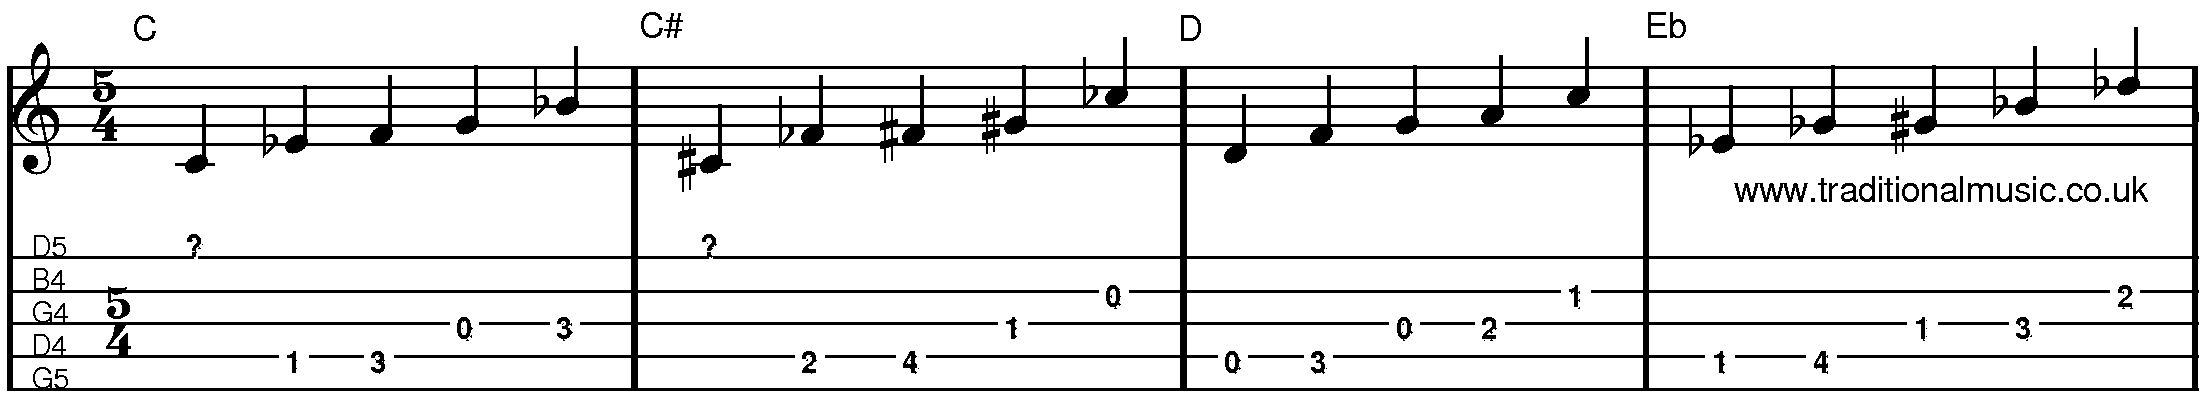 Minor Pentatonic Scales for Banjo C to Eb